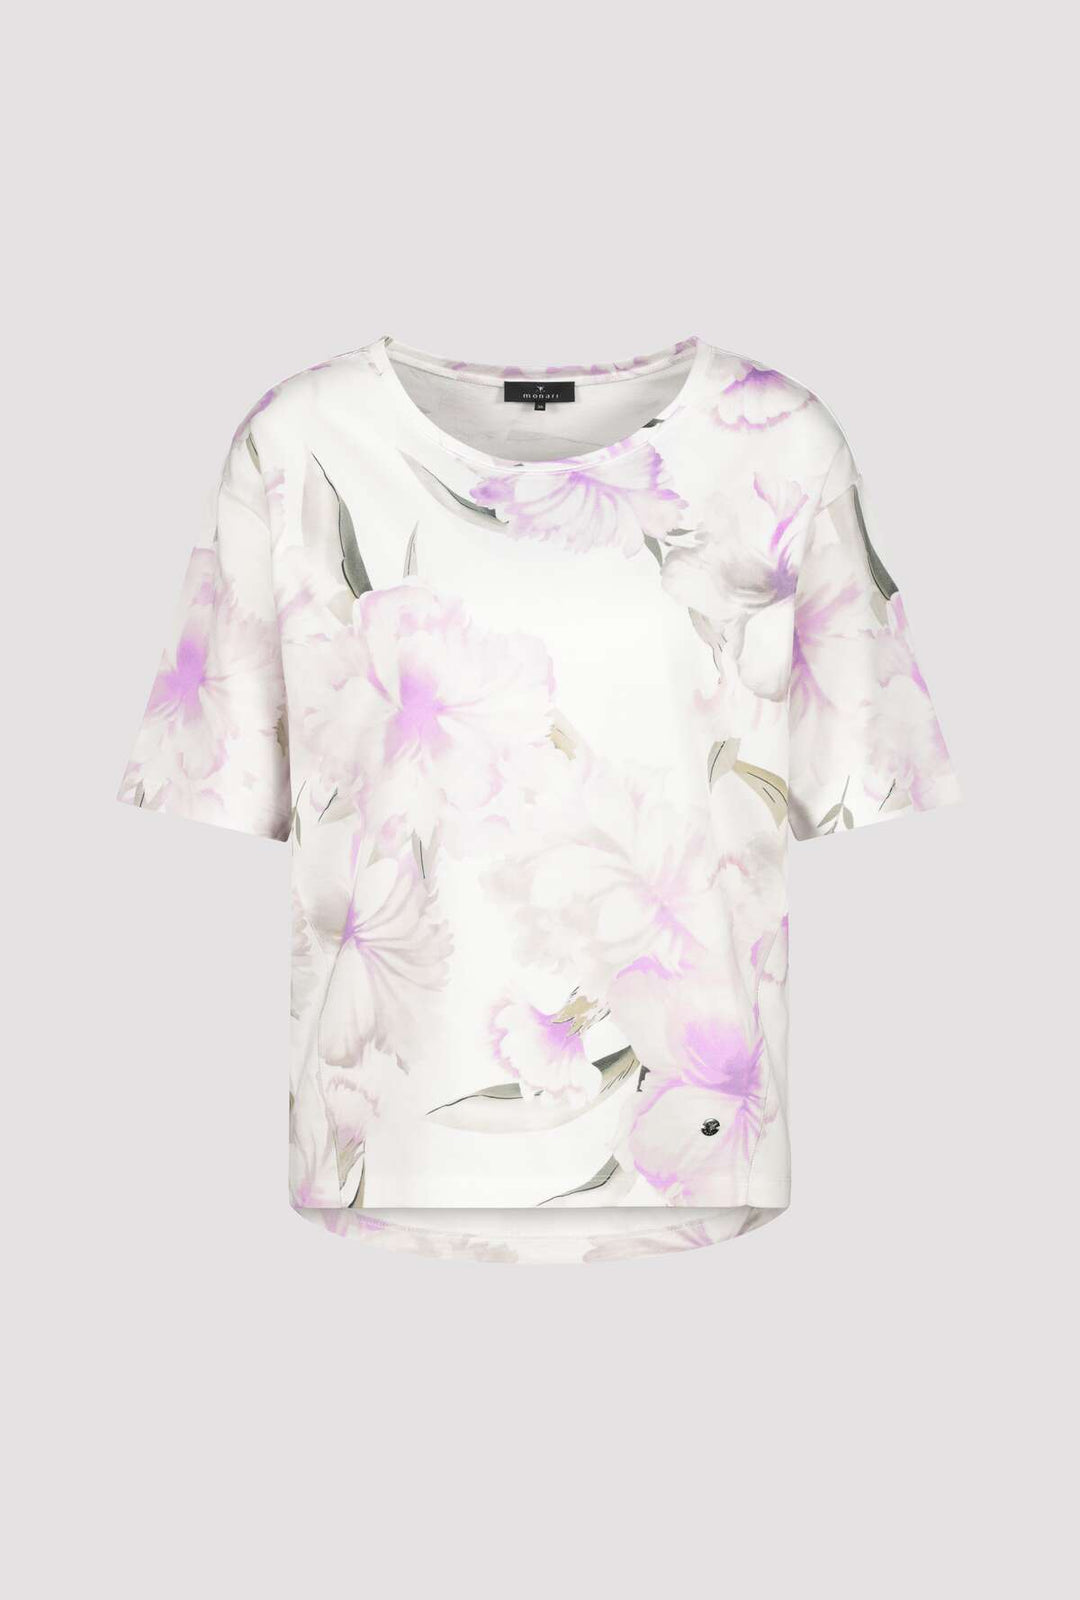 Floral pattern t-shirt